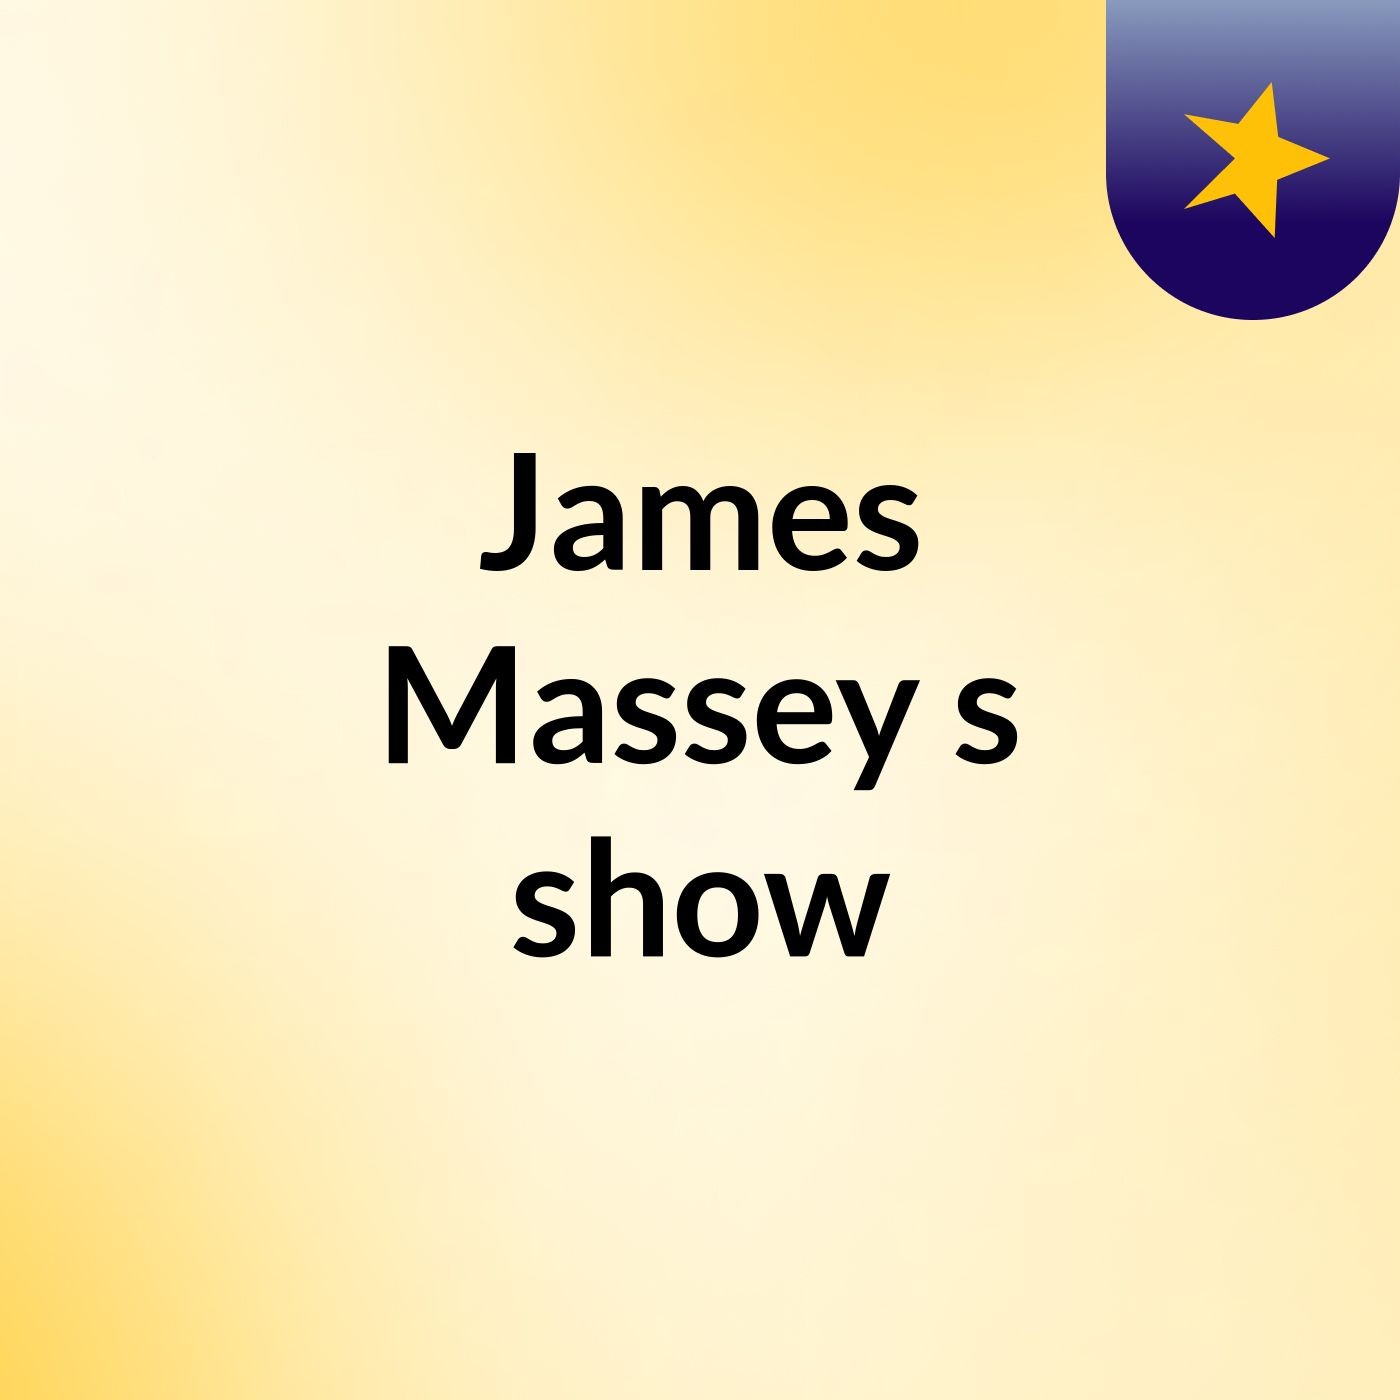 James Massey's show